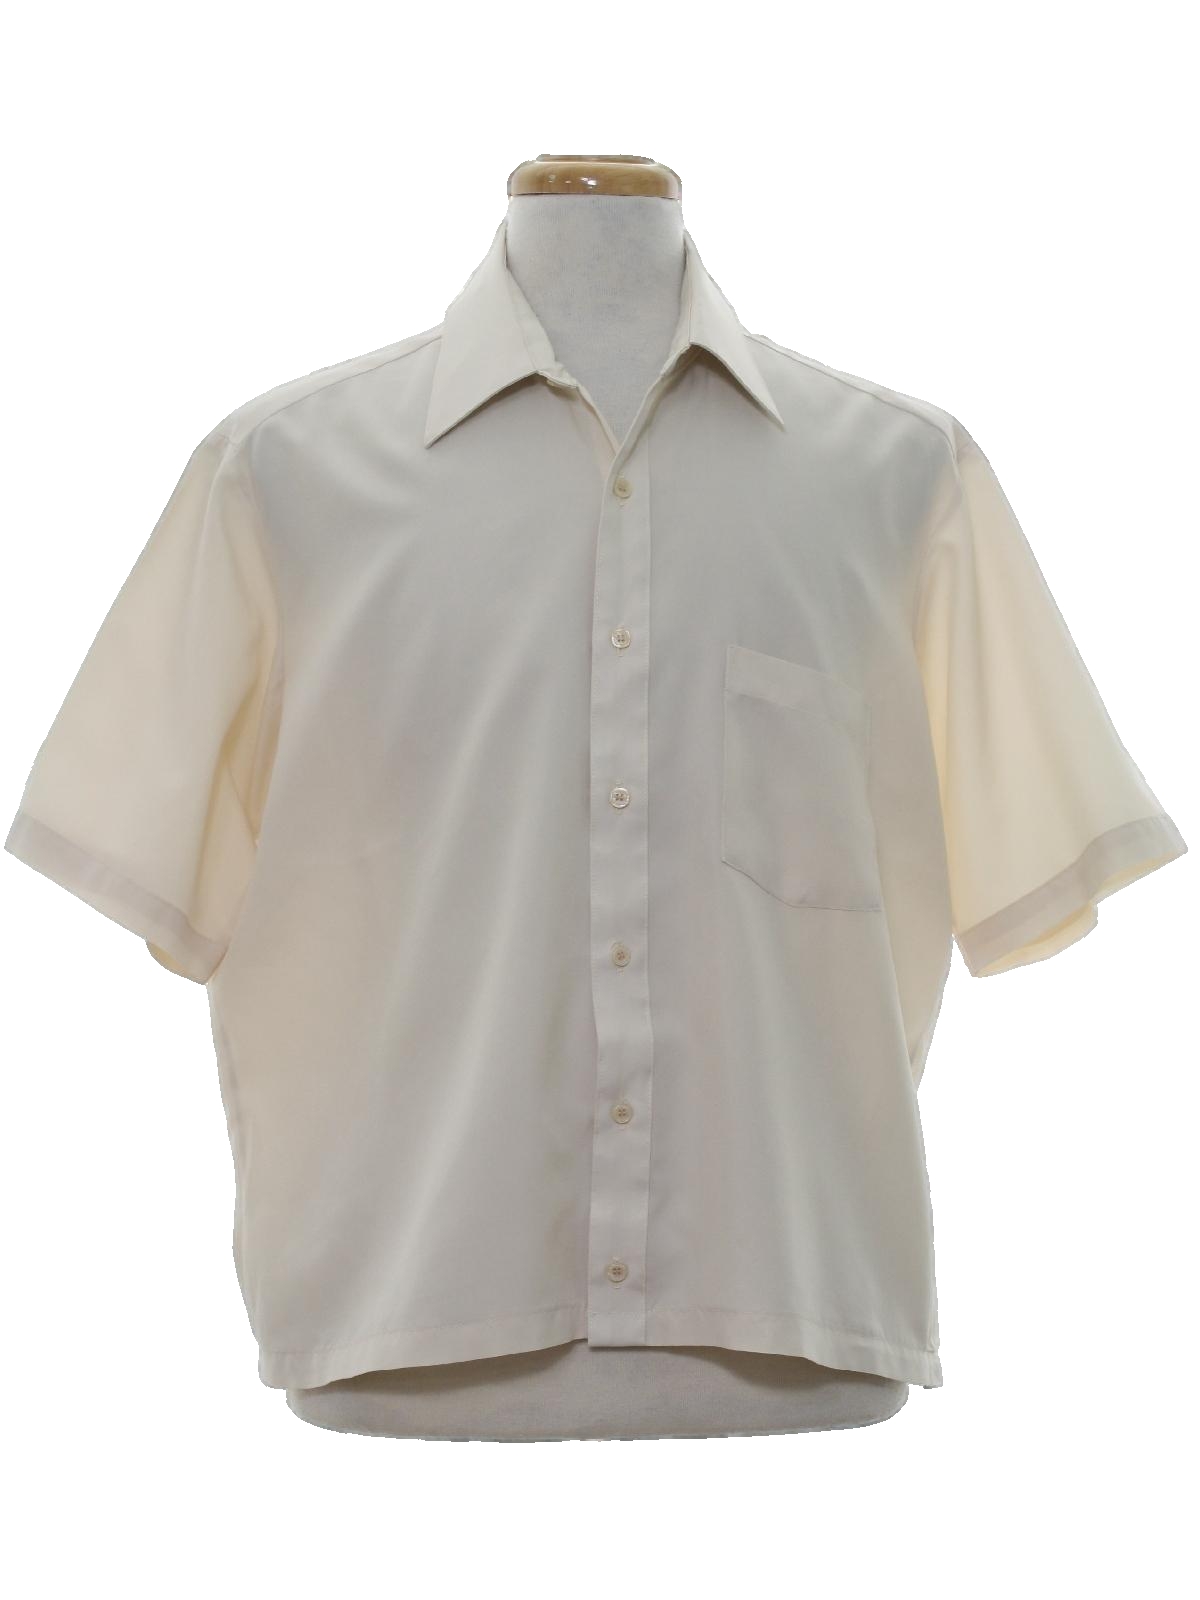 Retro 1970s Shirt: 70s -Sears Perma Prest Ultressa- Mens light beige ...